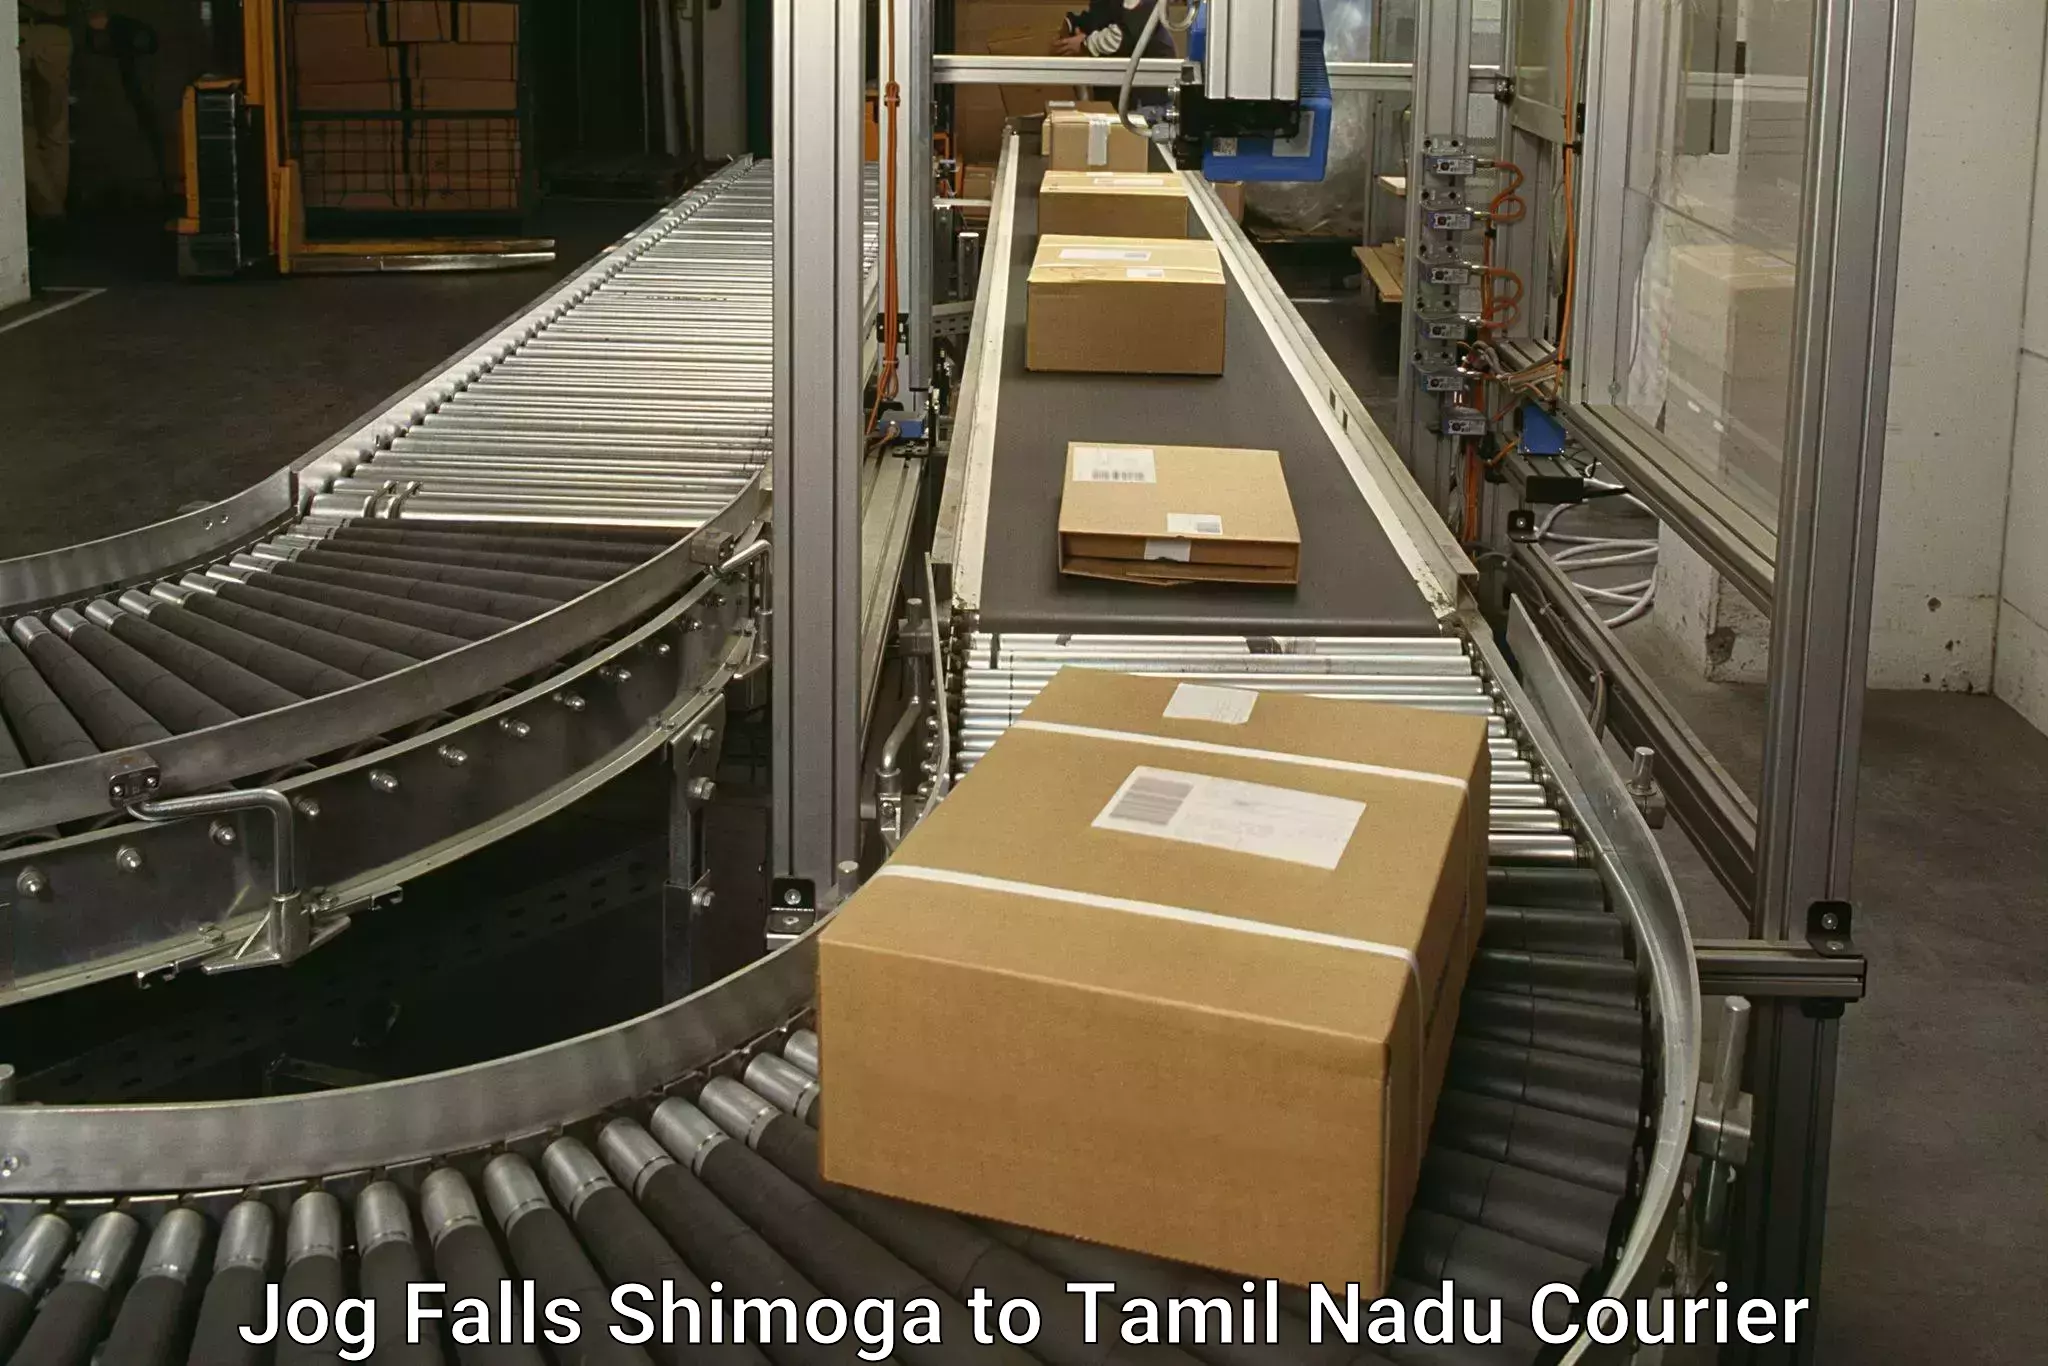 Professional delivery solutions Jog Falls Shimoga to Periyakulam